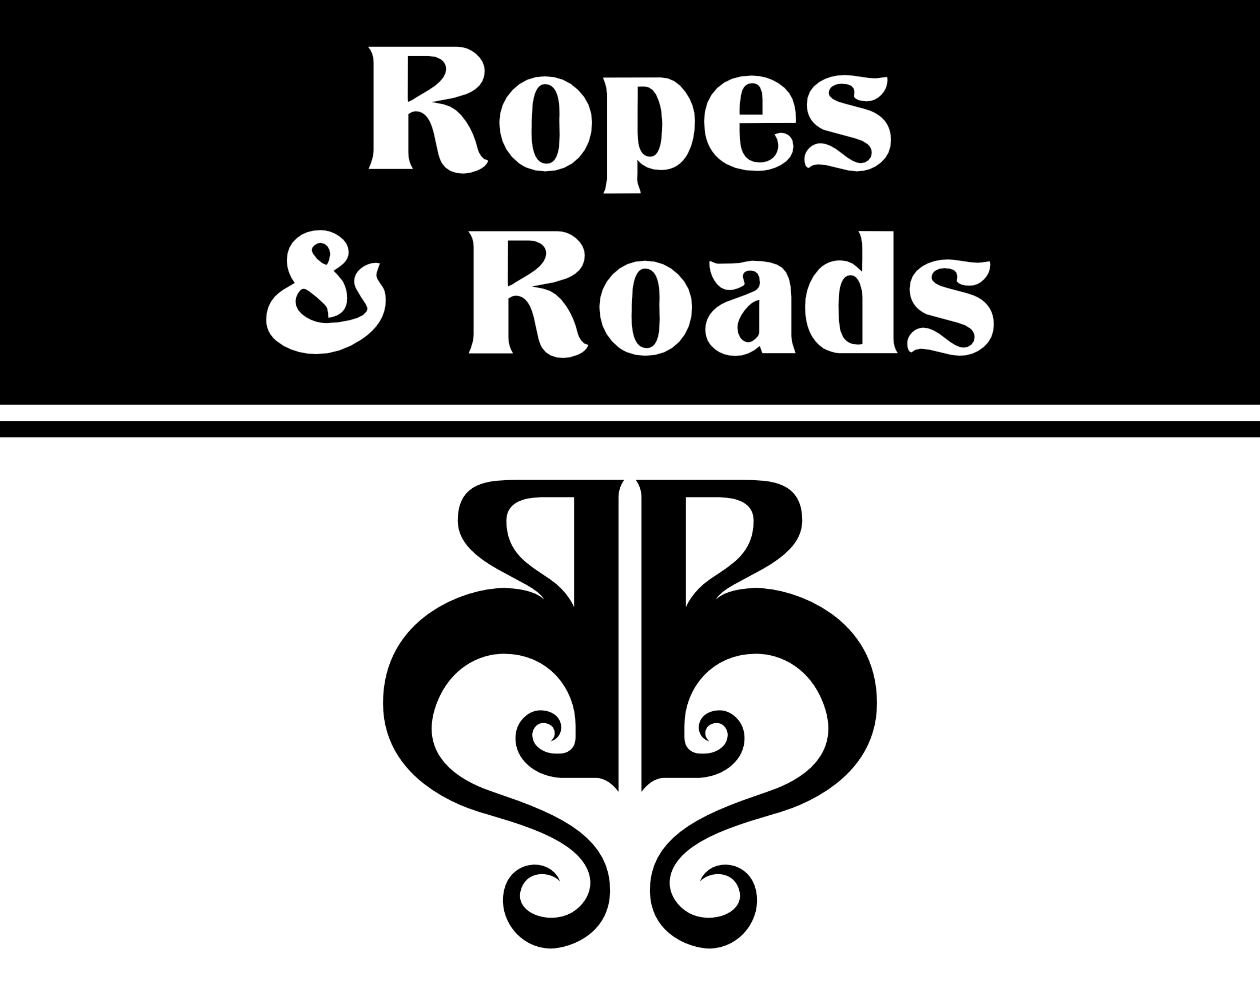 Ropes & Roads